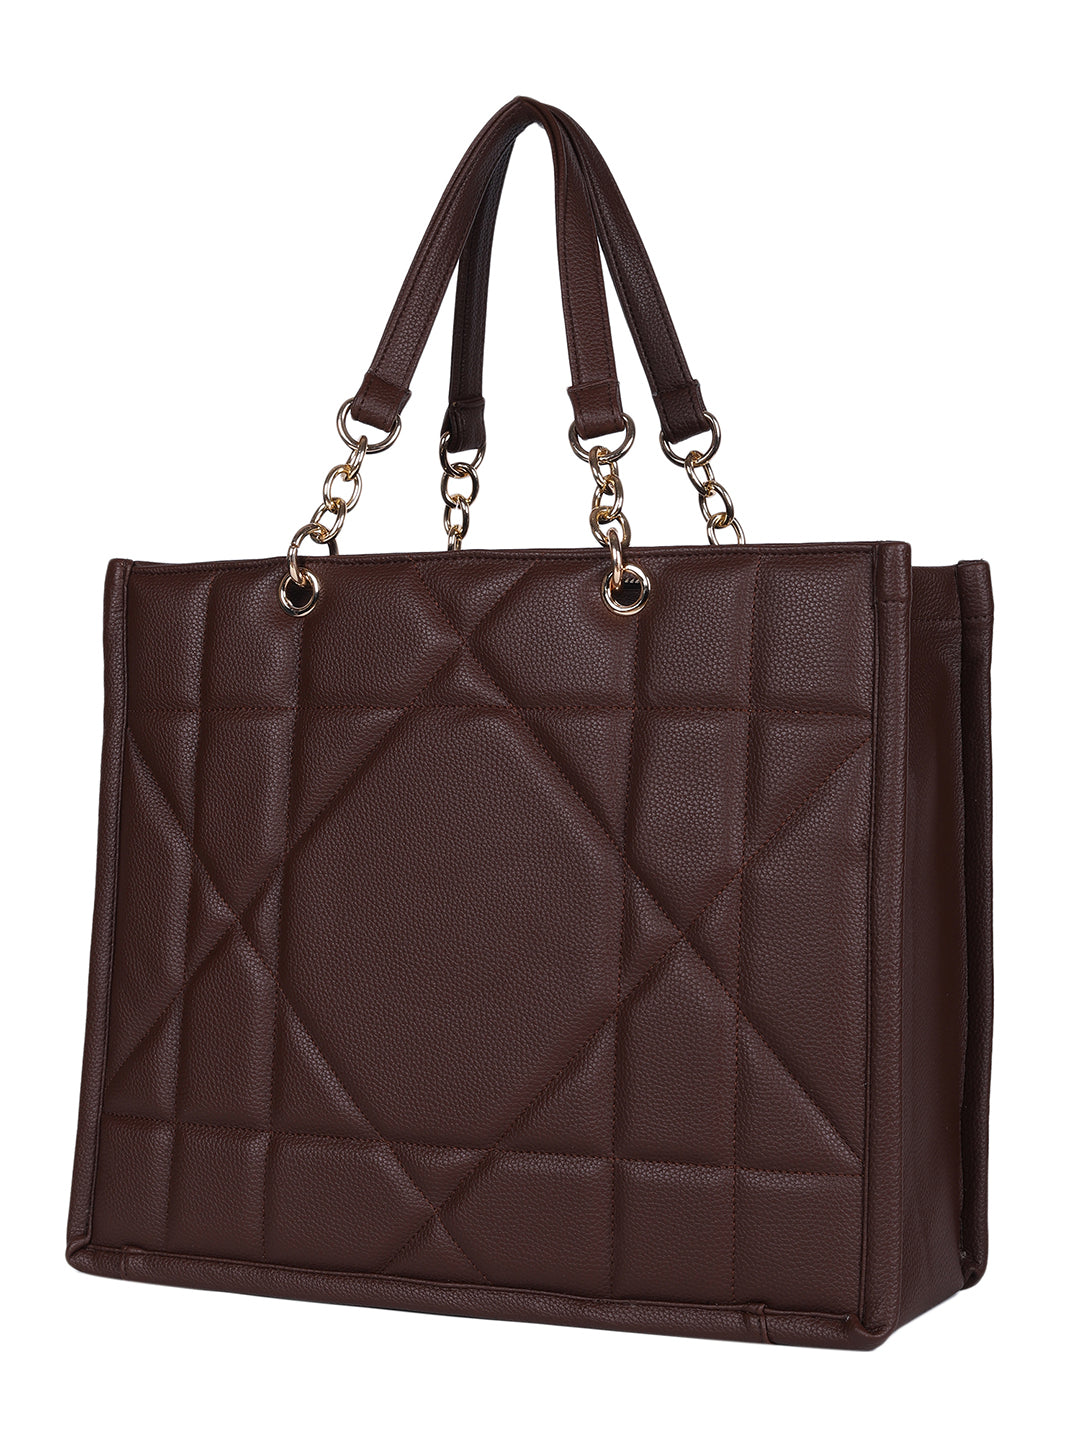 DENVER BAGS MINI WESST Brown Textured Tote Bag(MWTB106BR)